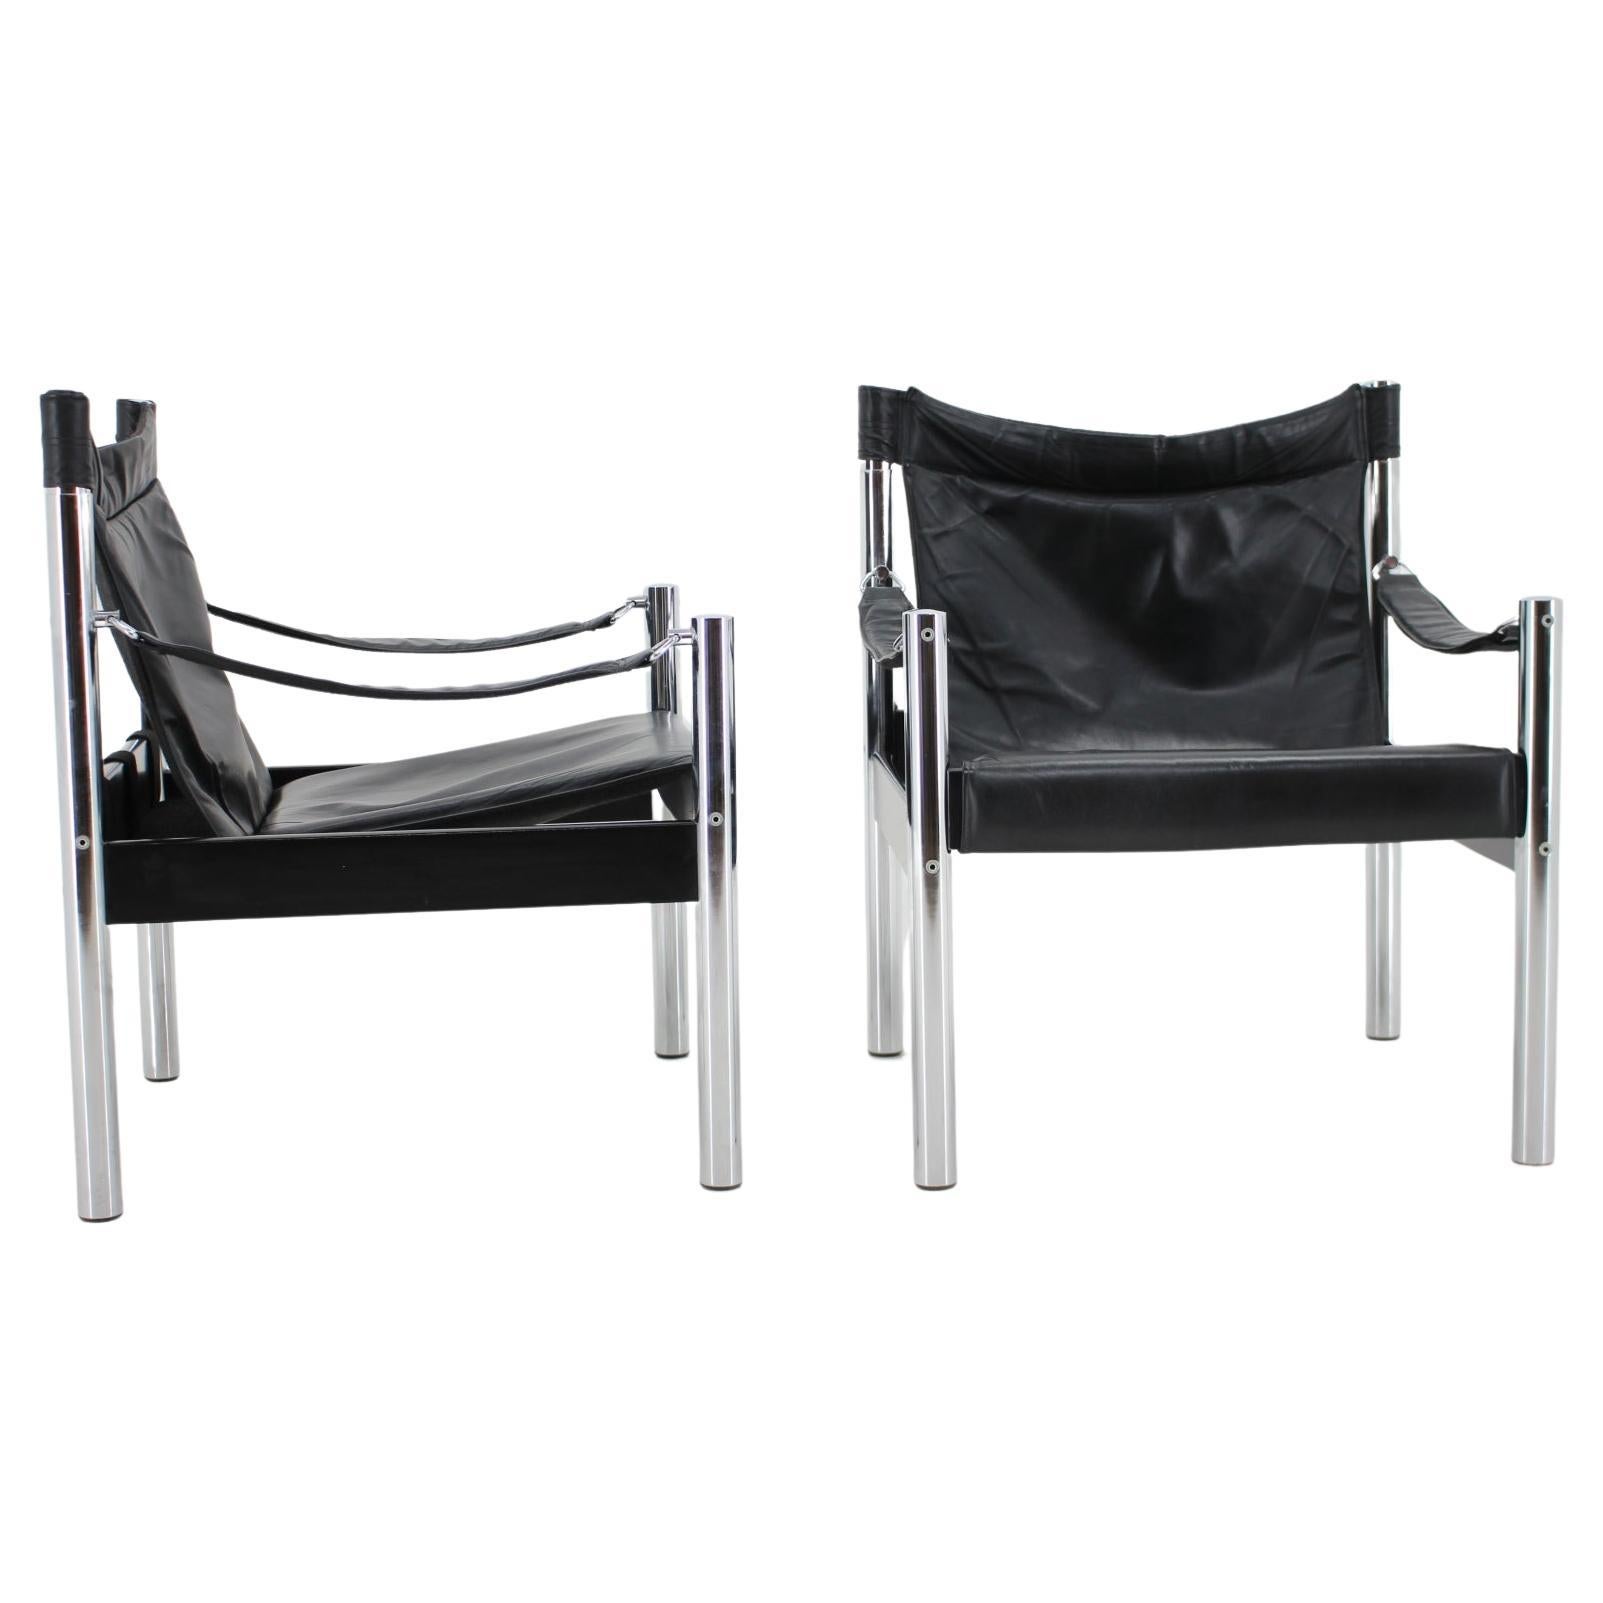 1970s Black Leather and Chrome Safari Chair by Johanson Design, Markaryd For Sale